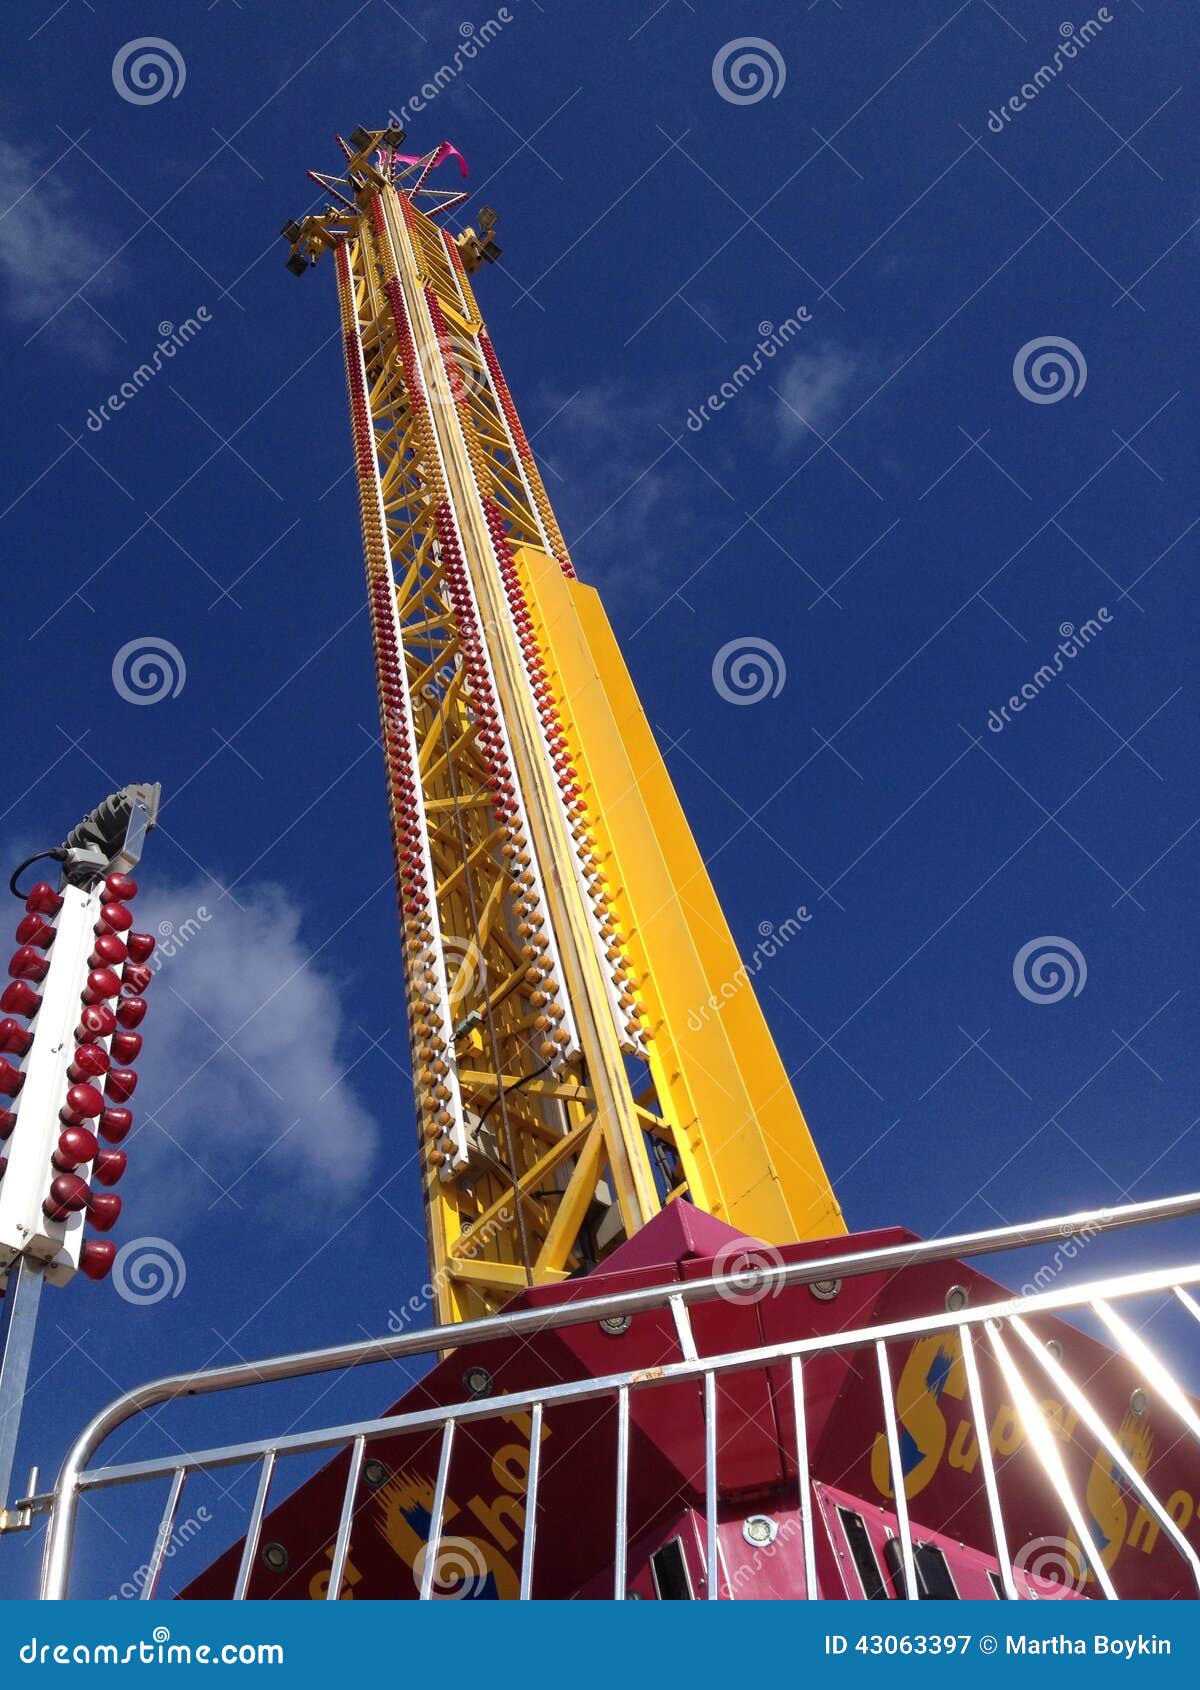 Carnival Ride Super Shot Stock Image Image Of Drop Fair